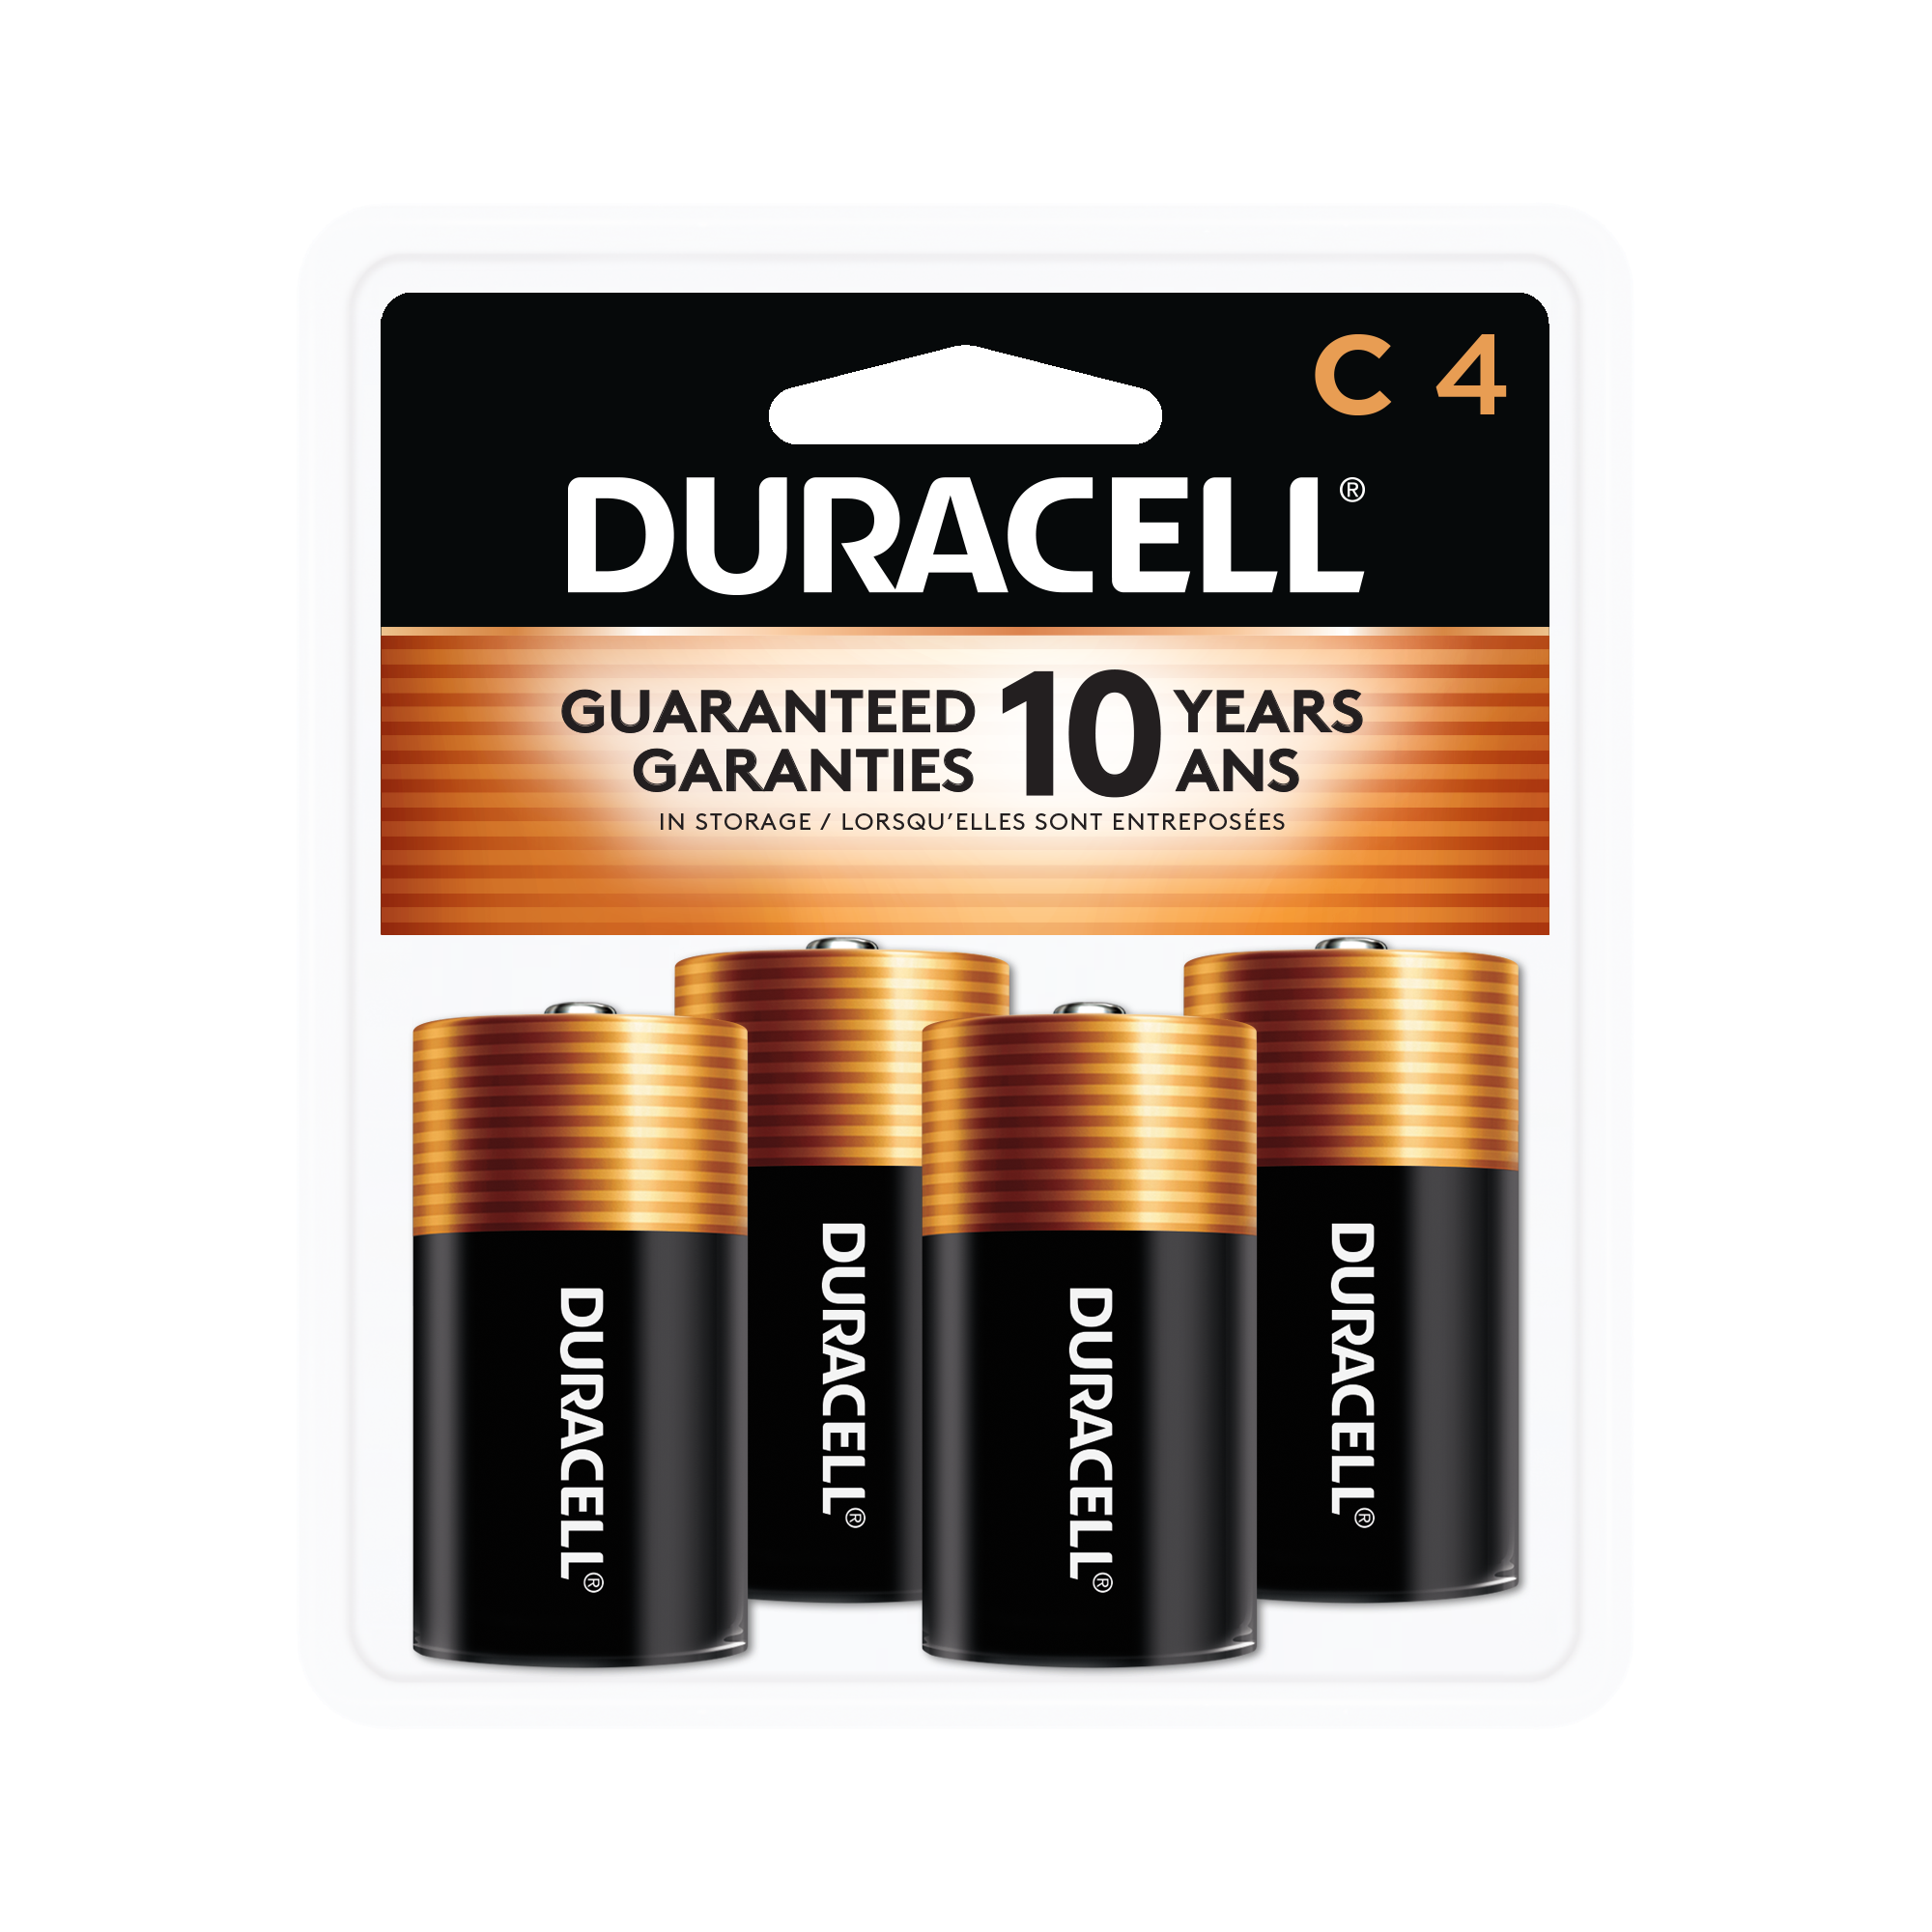 Duracell Coppertop Alkaline C Batteries (4-Pack) the C Batteries department at Lowes.com